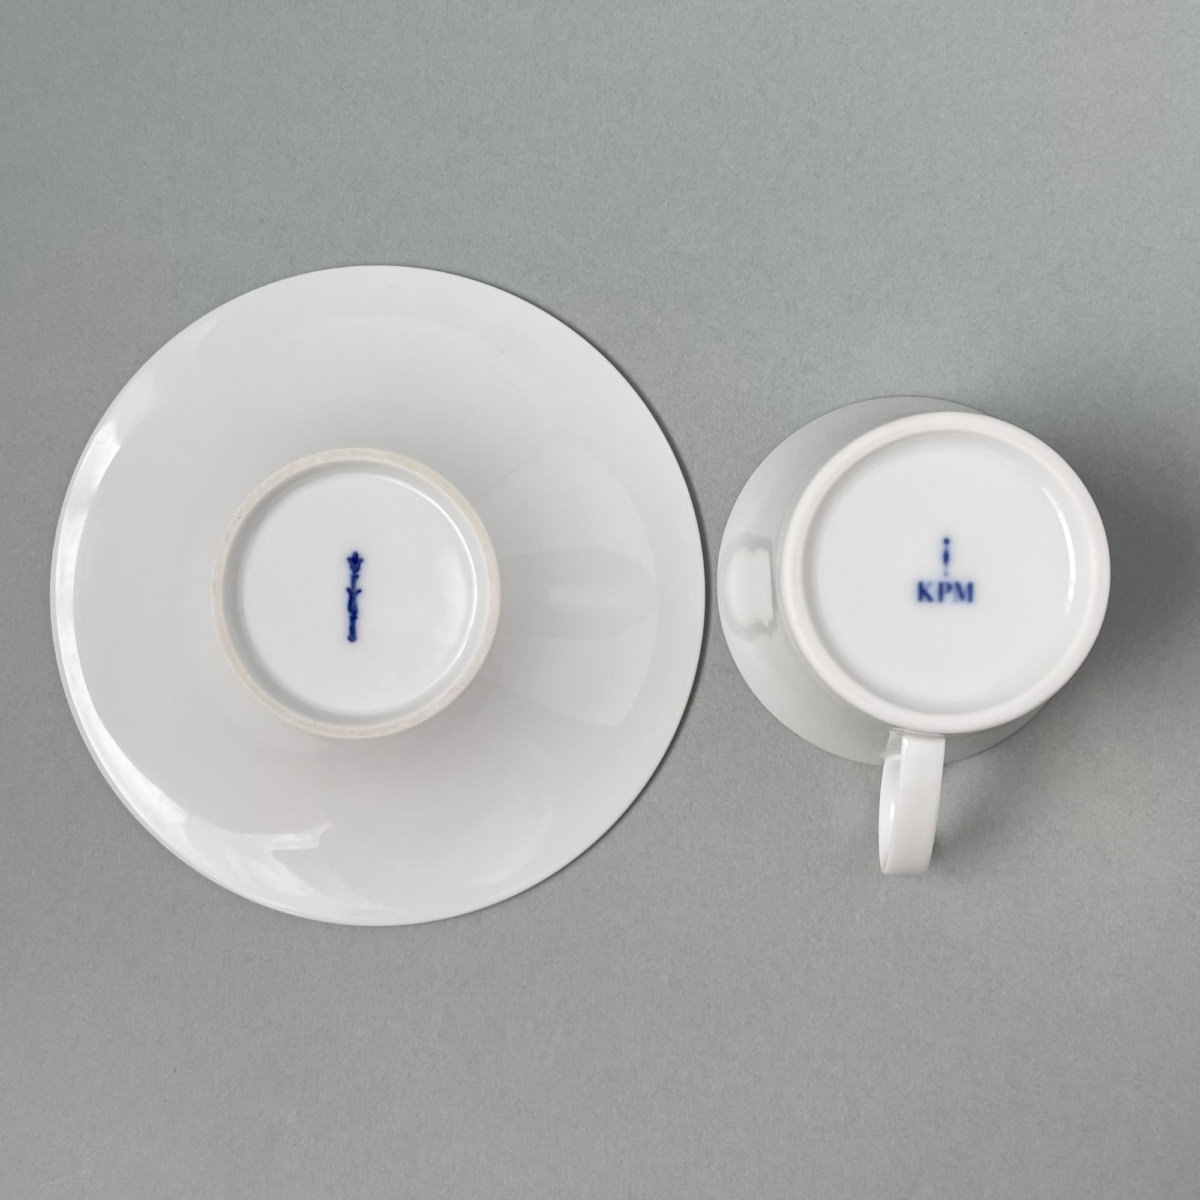 OthersKPM Royal Berlin Enzo Mari / Coffee cup & saucer